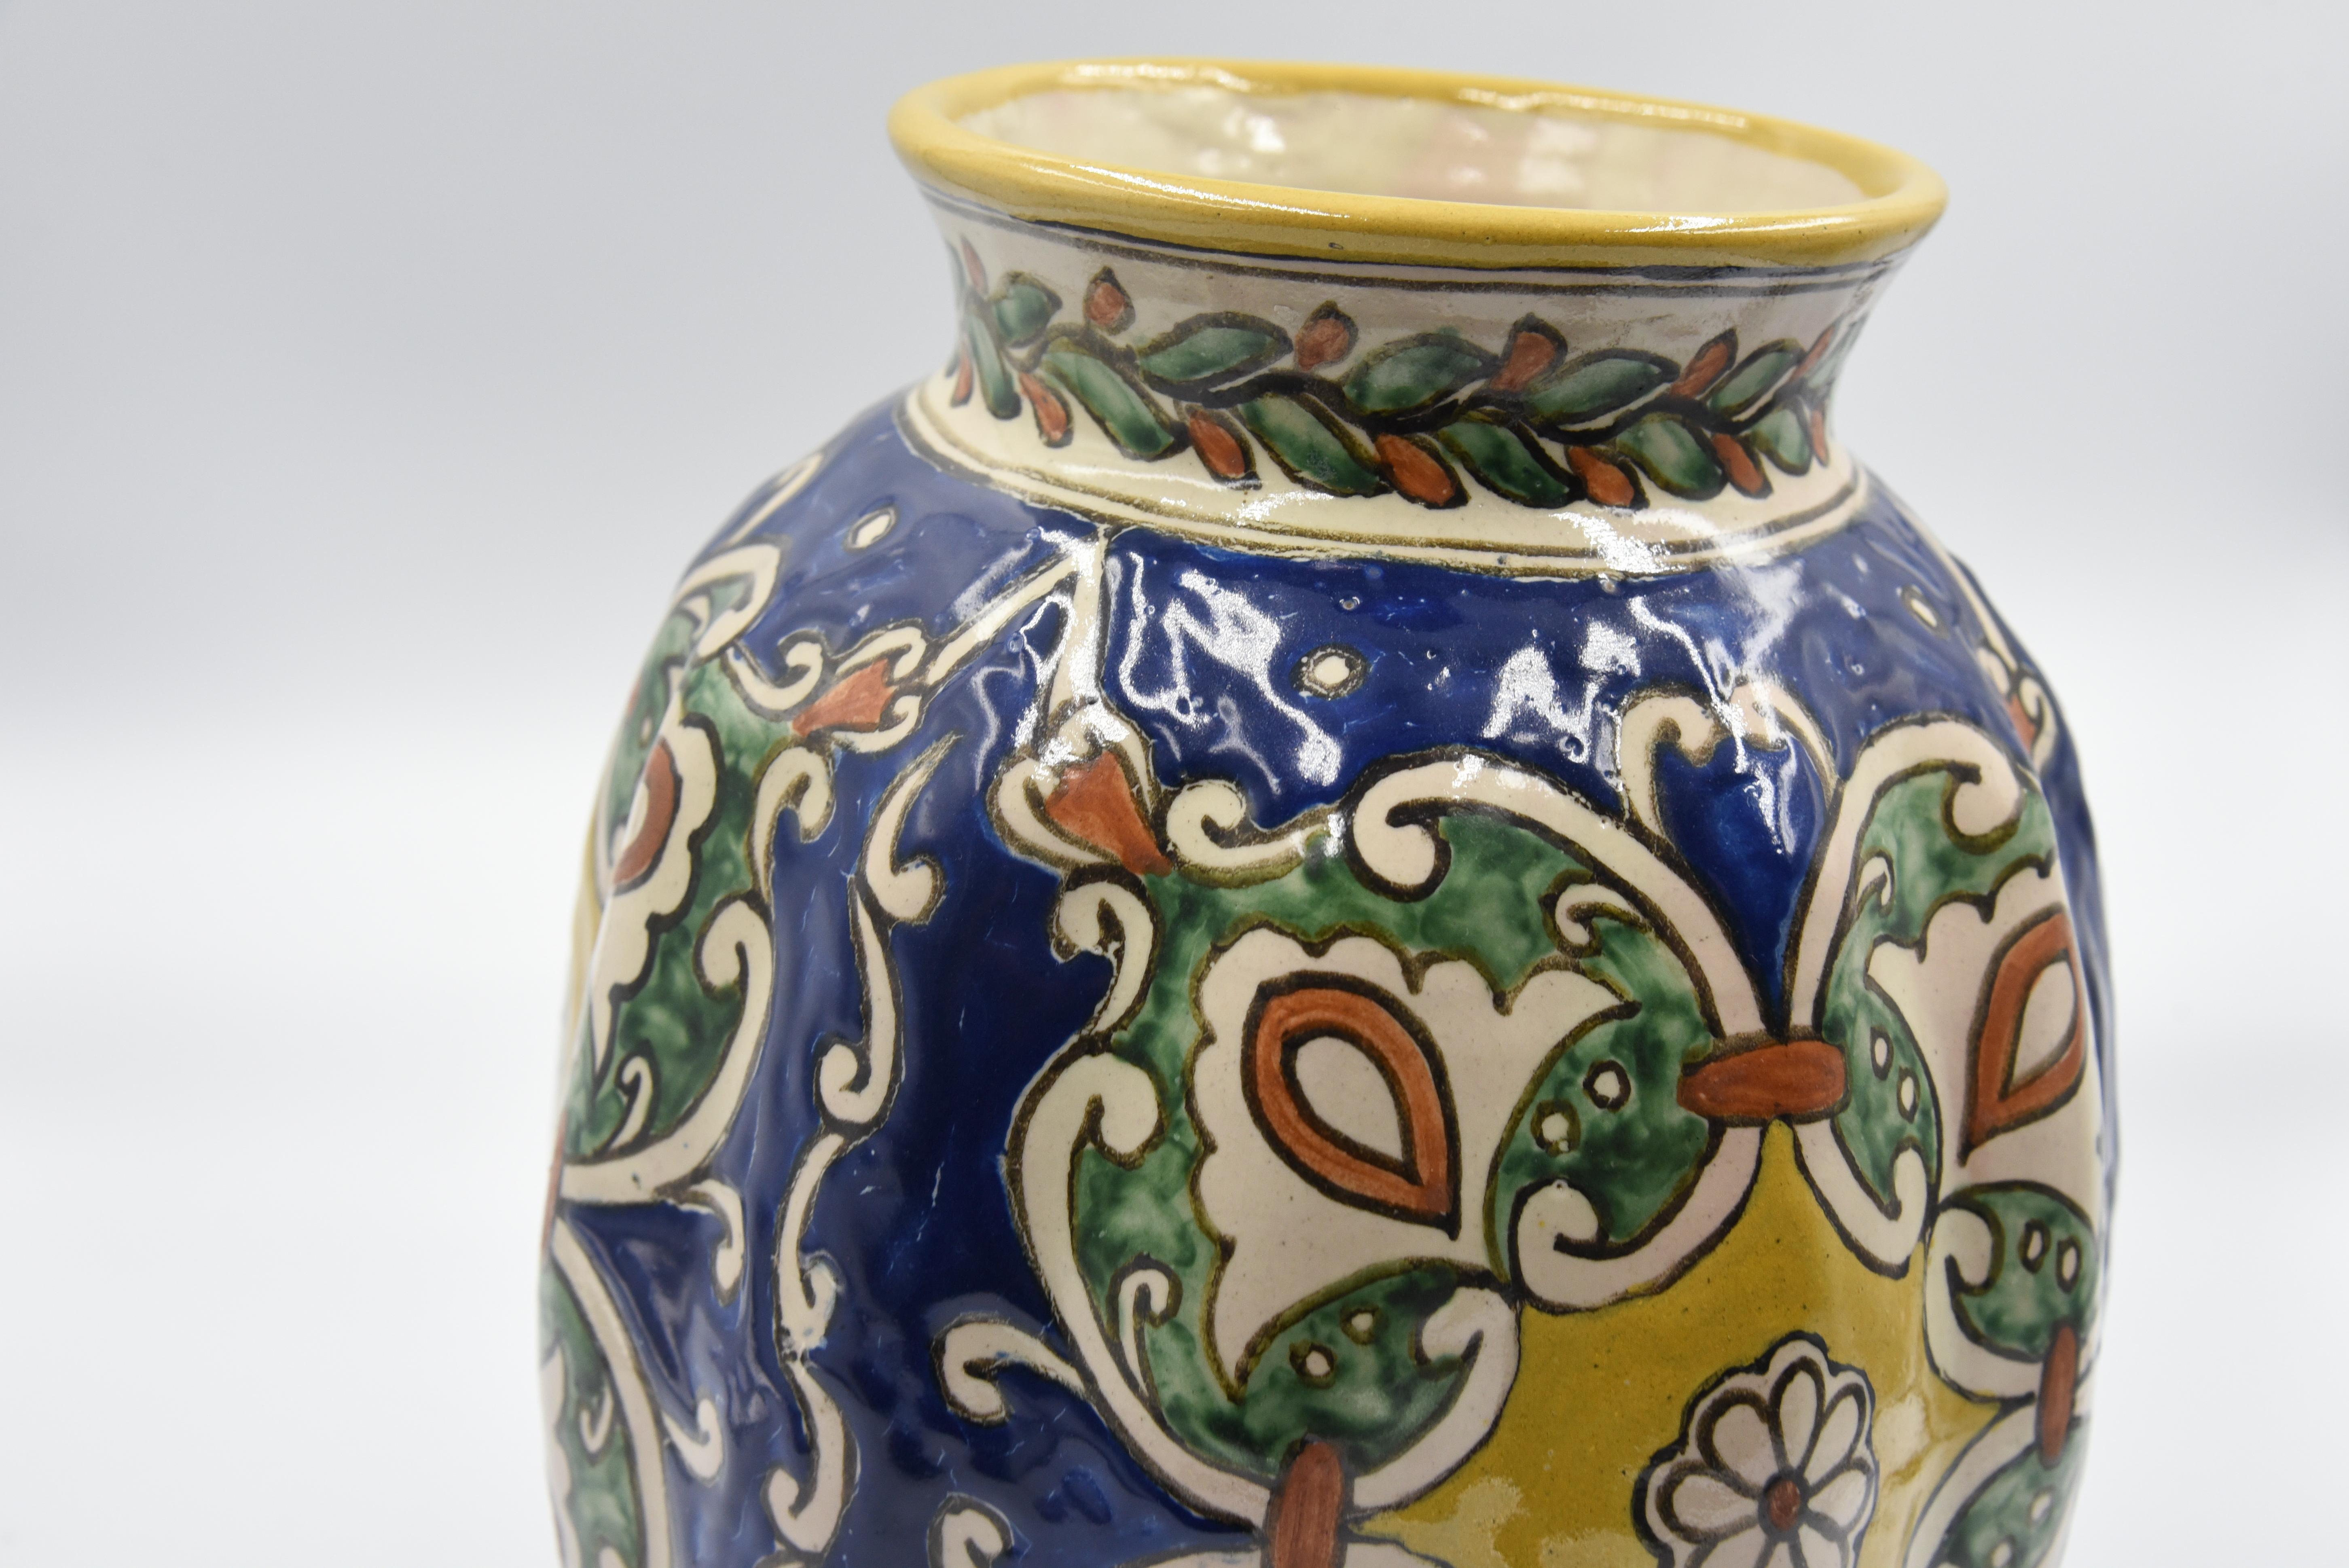 Hand-Crafted Authentic Talavera Decorative Vase Folk Art Vessel Mexican Ceramic Blue White